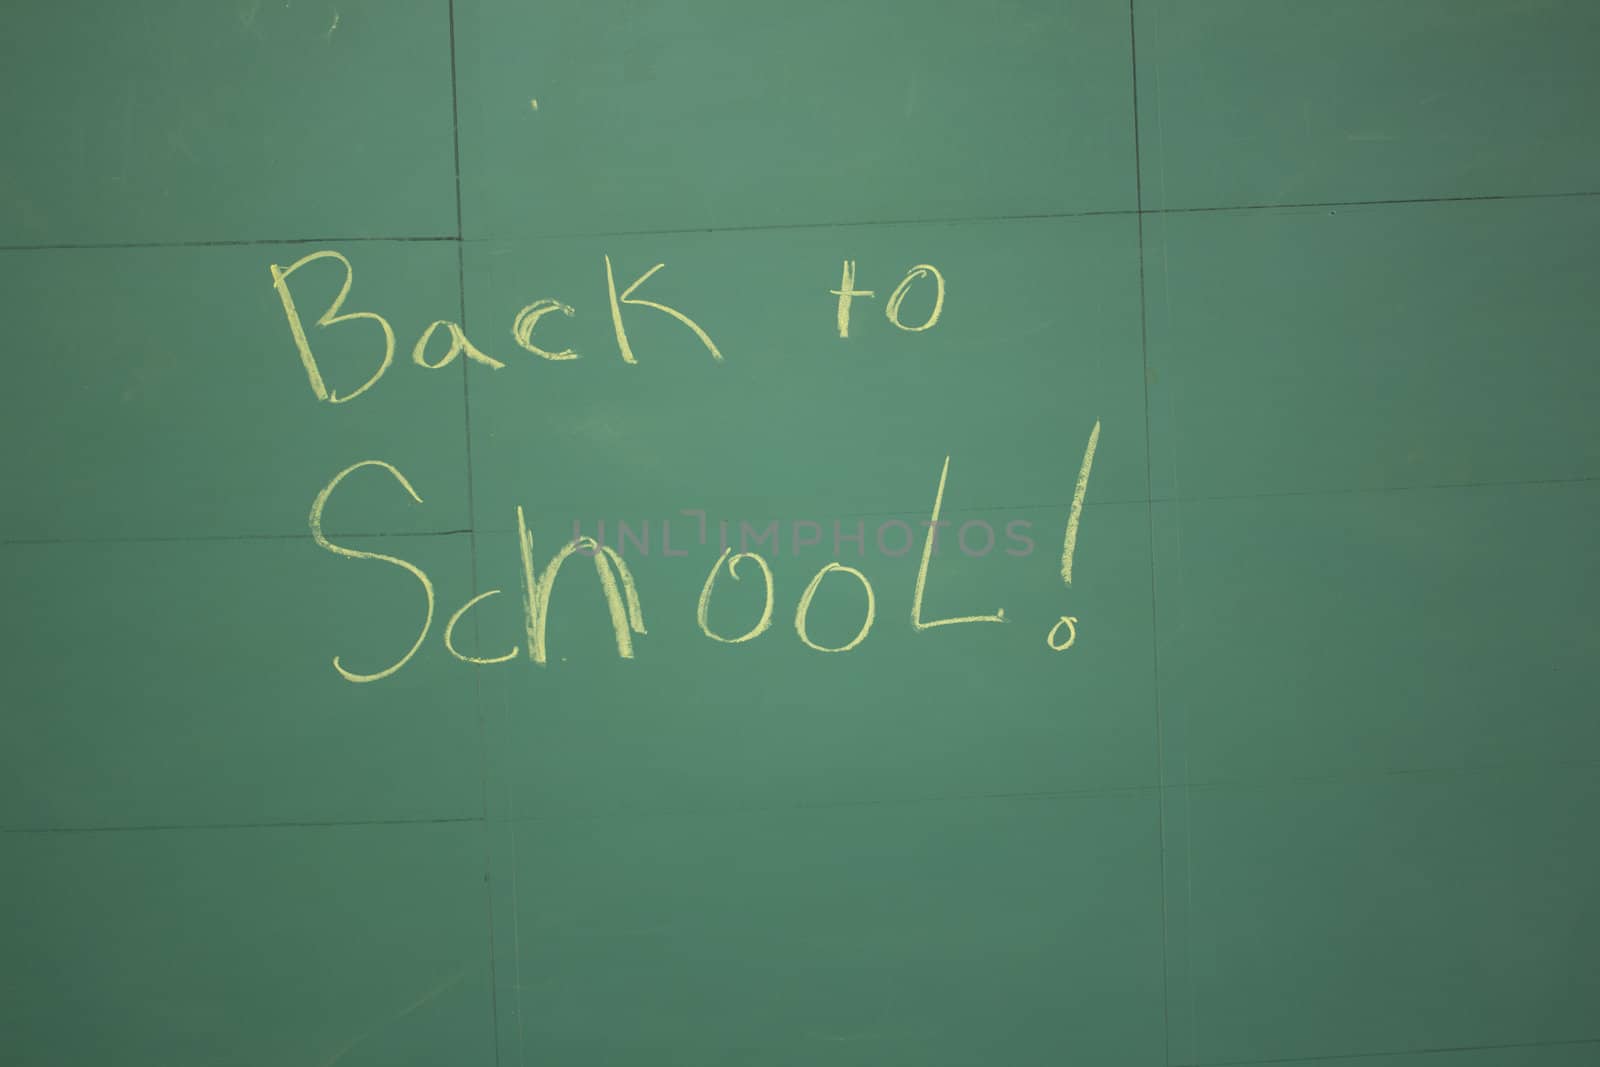 back to school on a chalk board